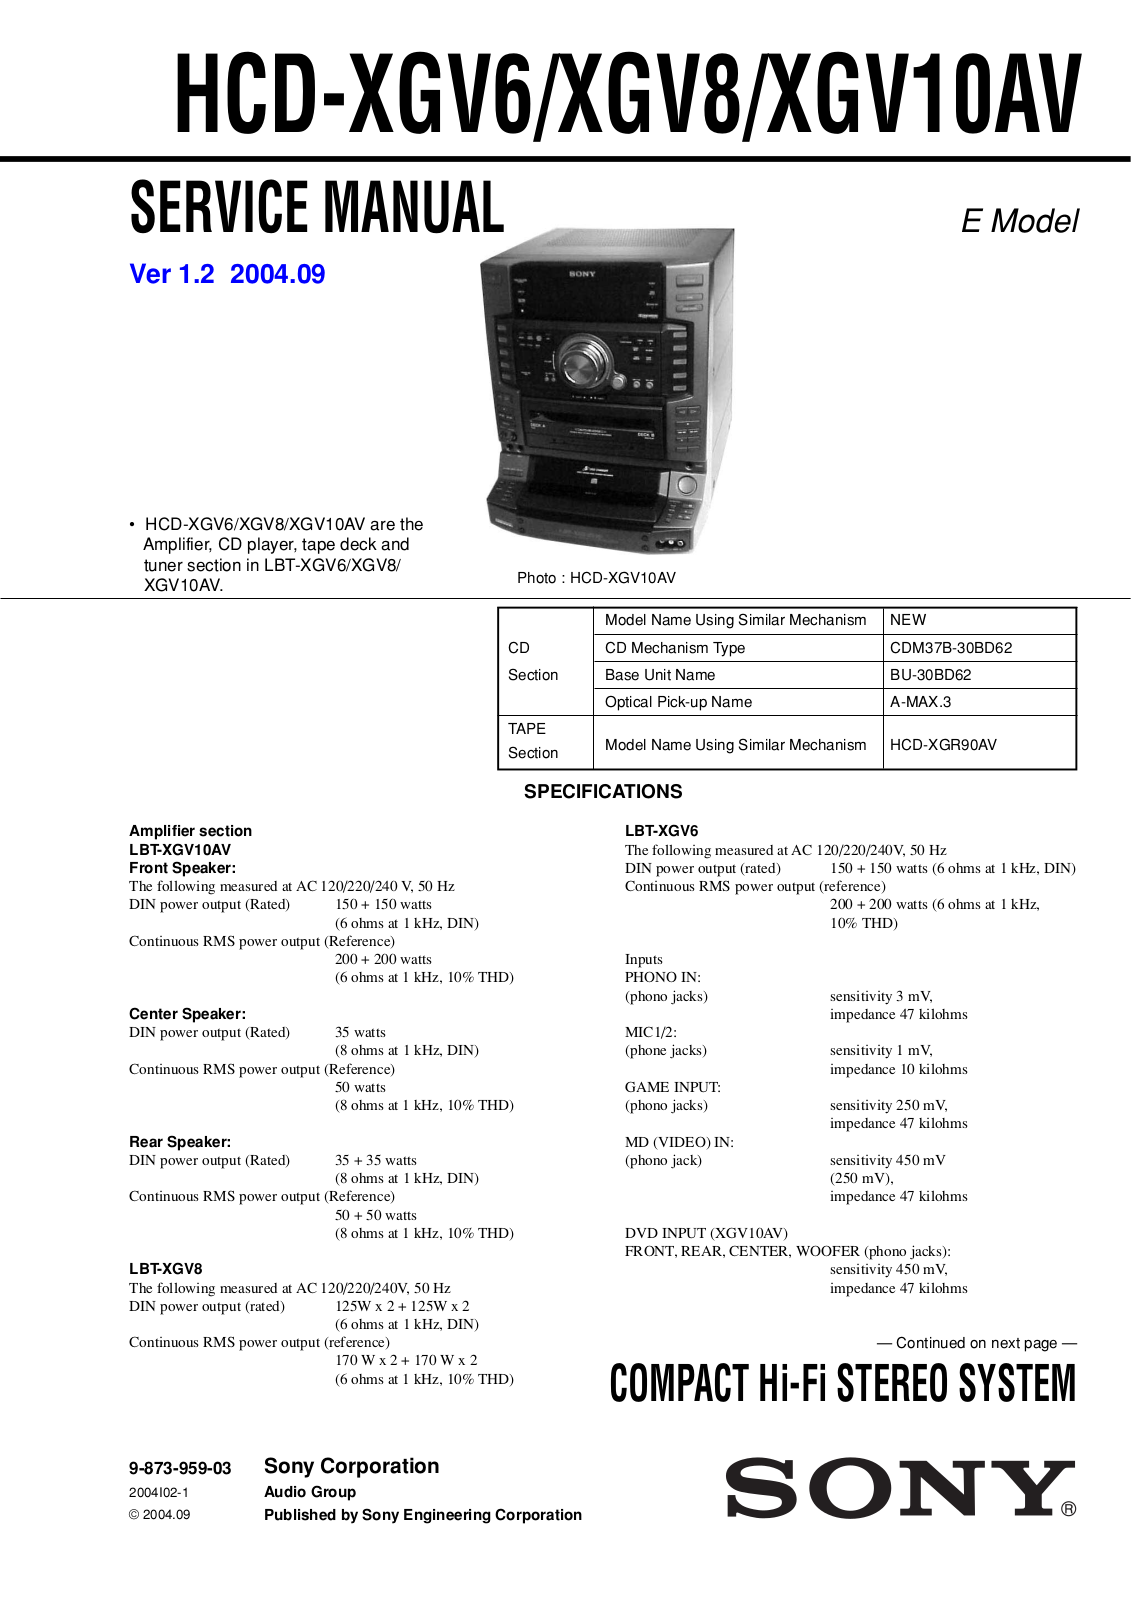 SONY HCD XGV6, HCD XGV8, HCD XGV10AV Service Manual